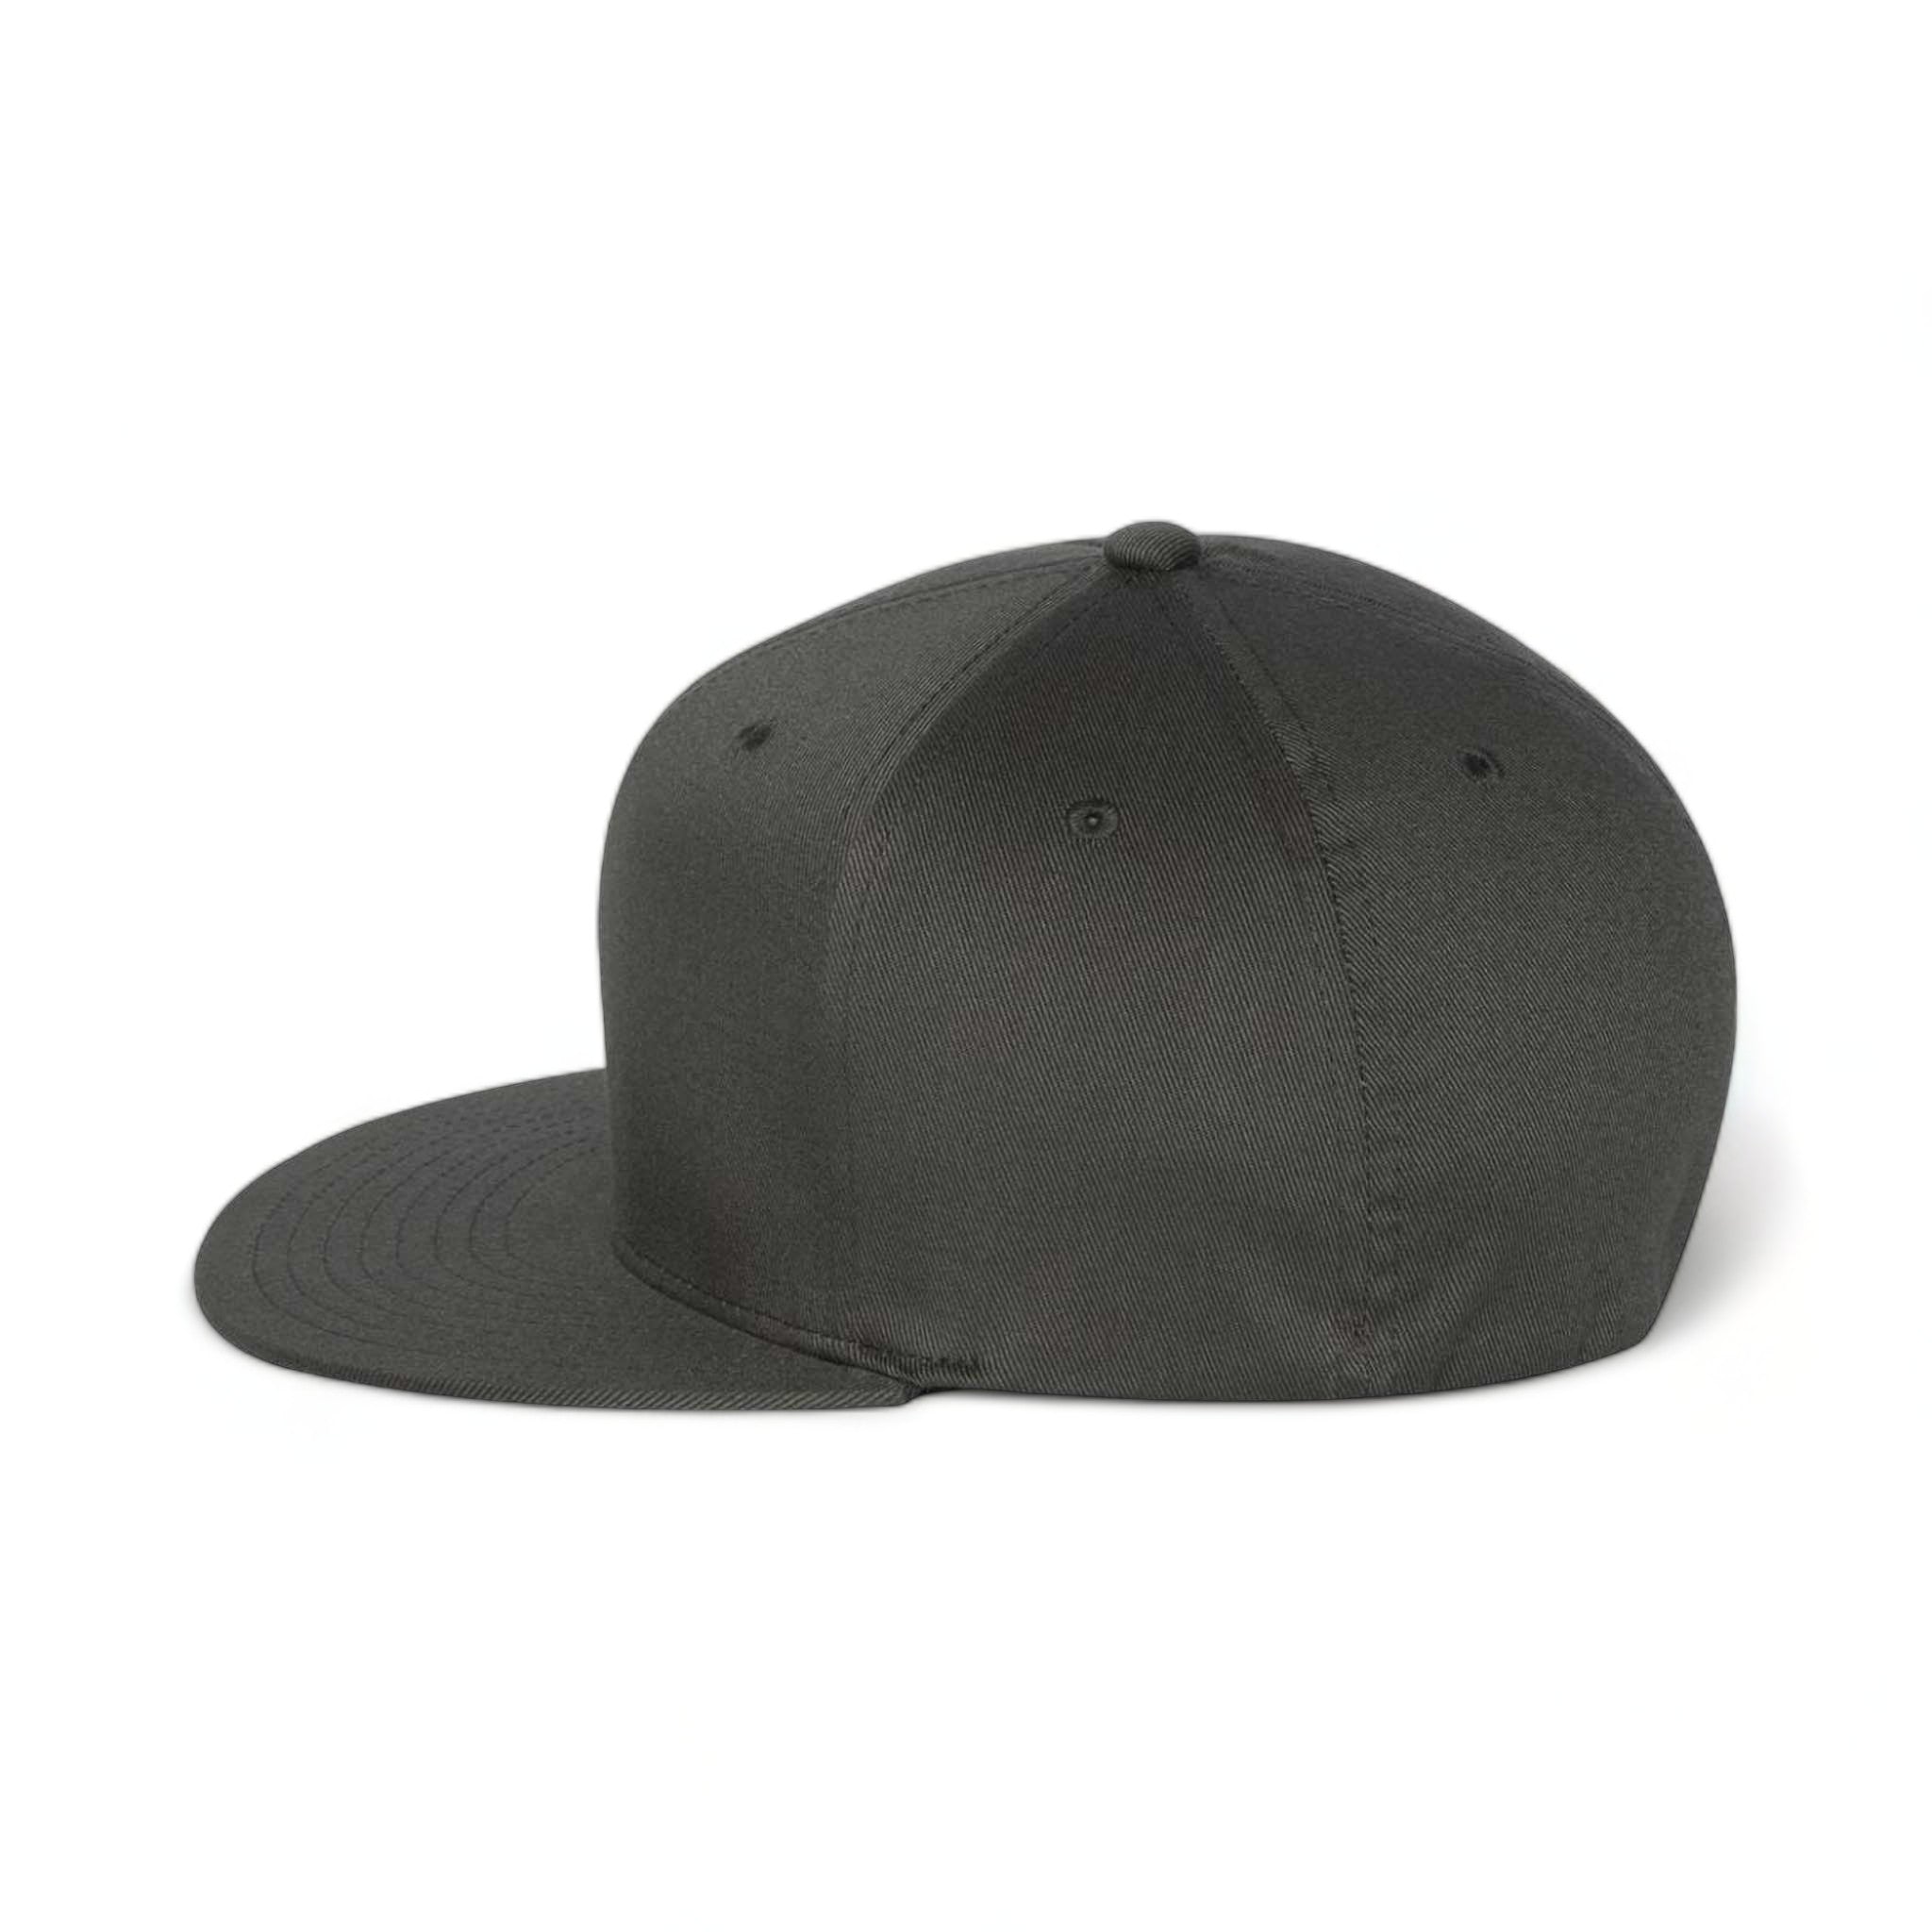 Side view of Flexfit 6297f custom hat in dark grey